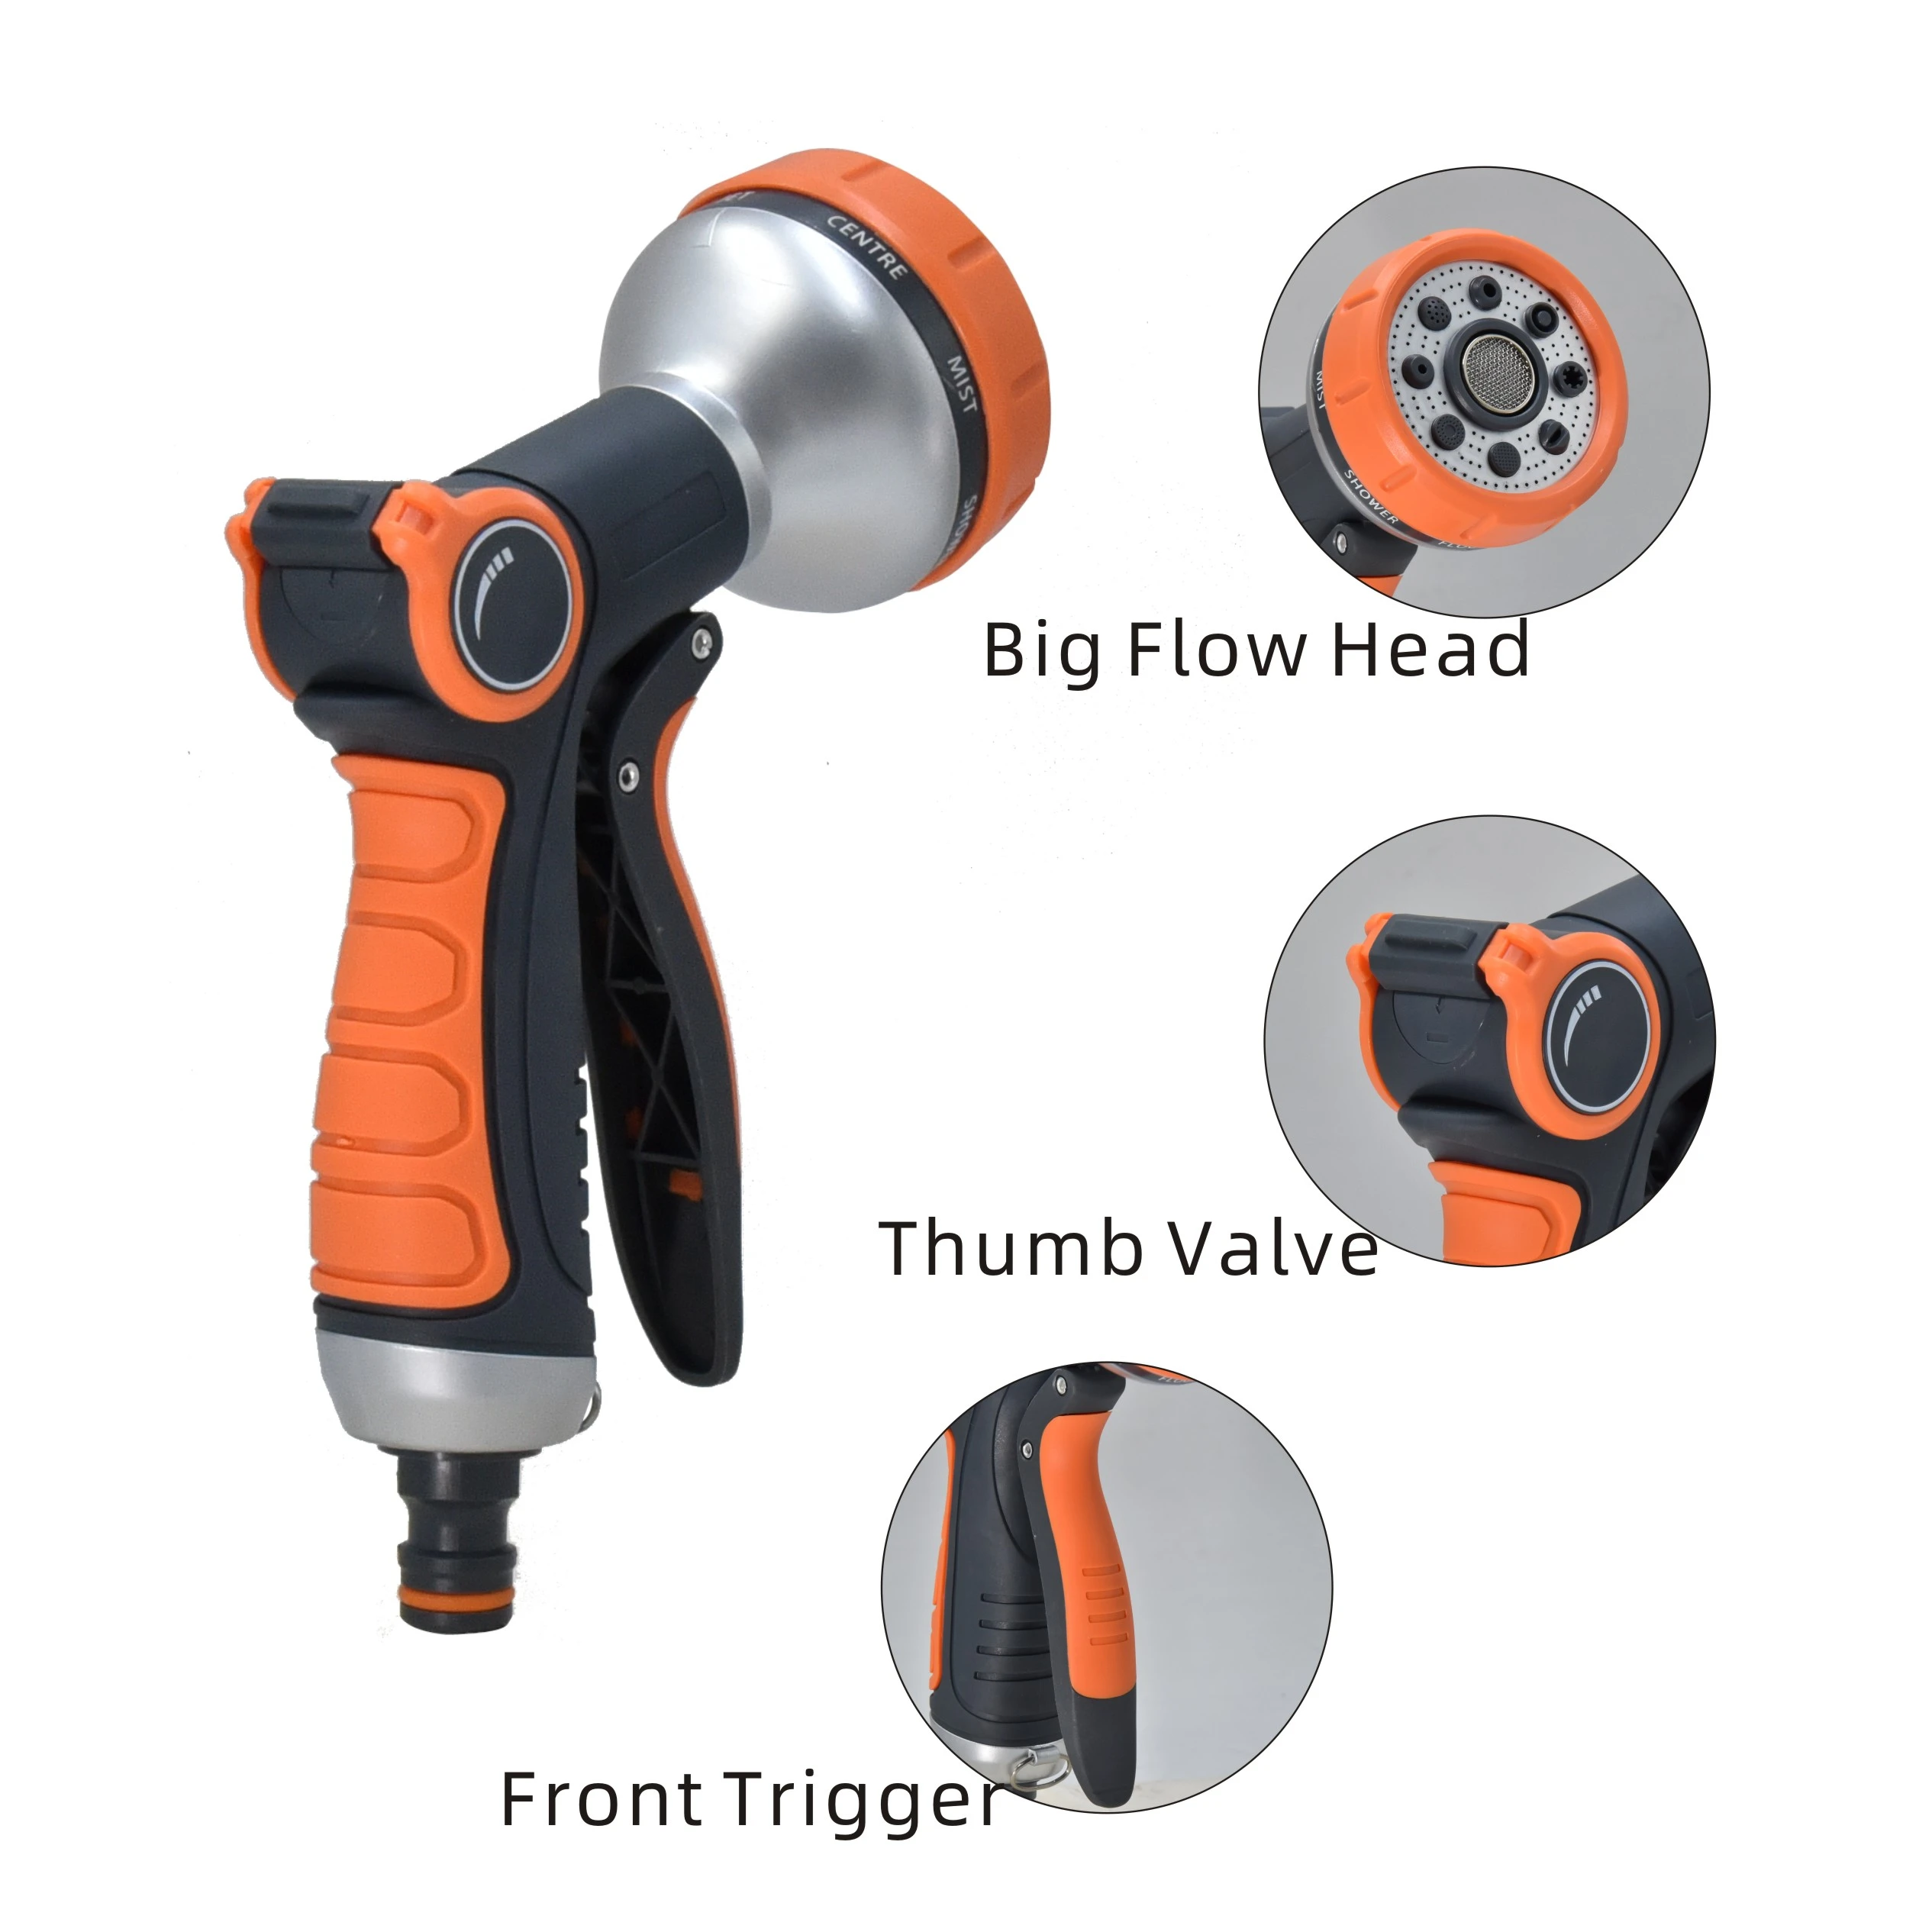 Front Trigger thumb valve 8 Way Garden Hose Nozzle